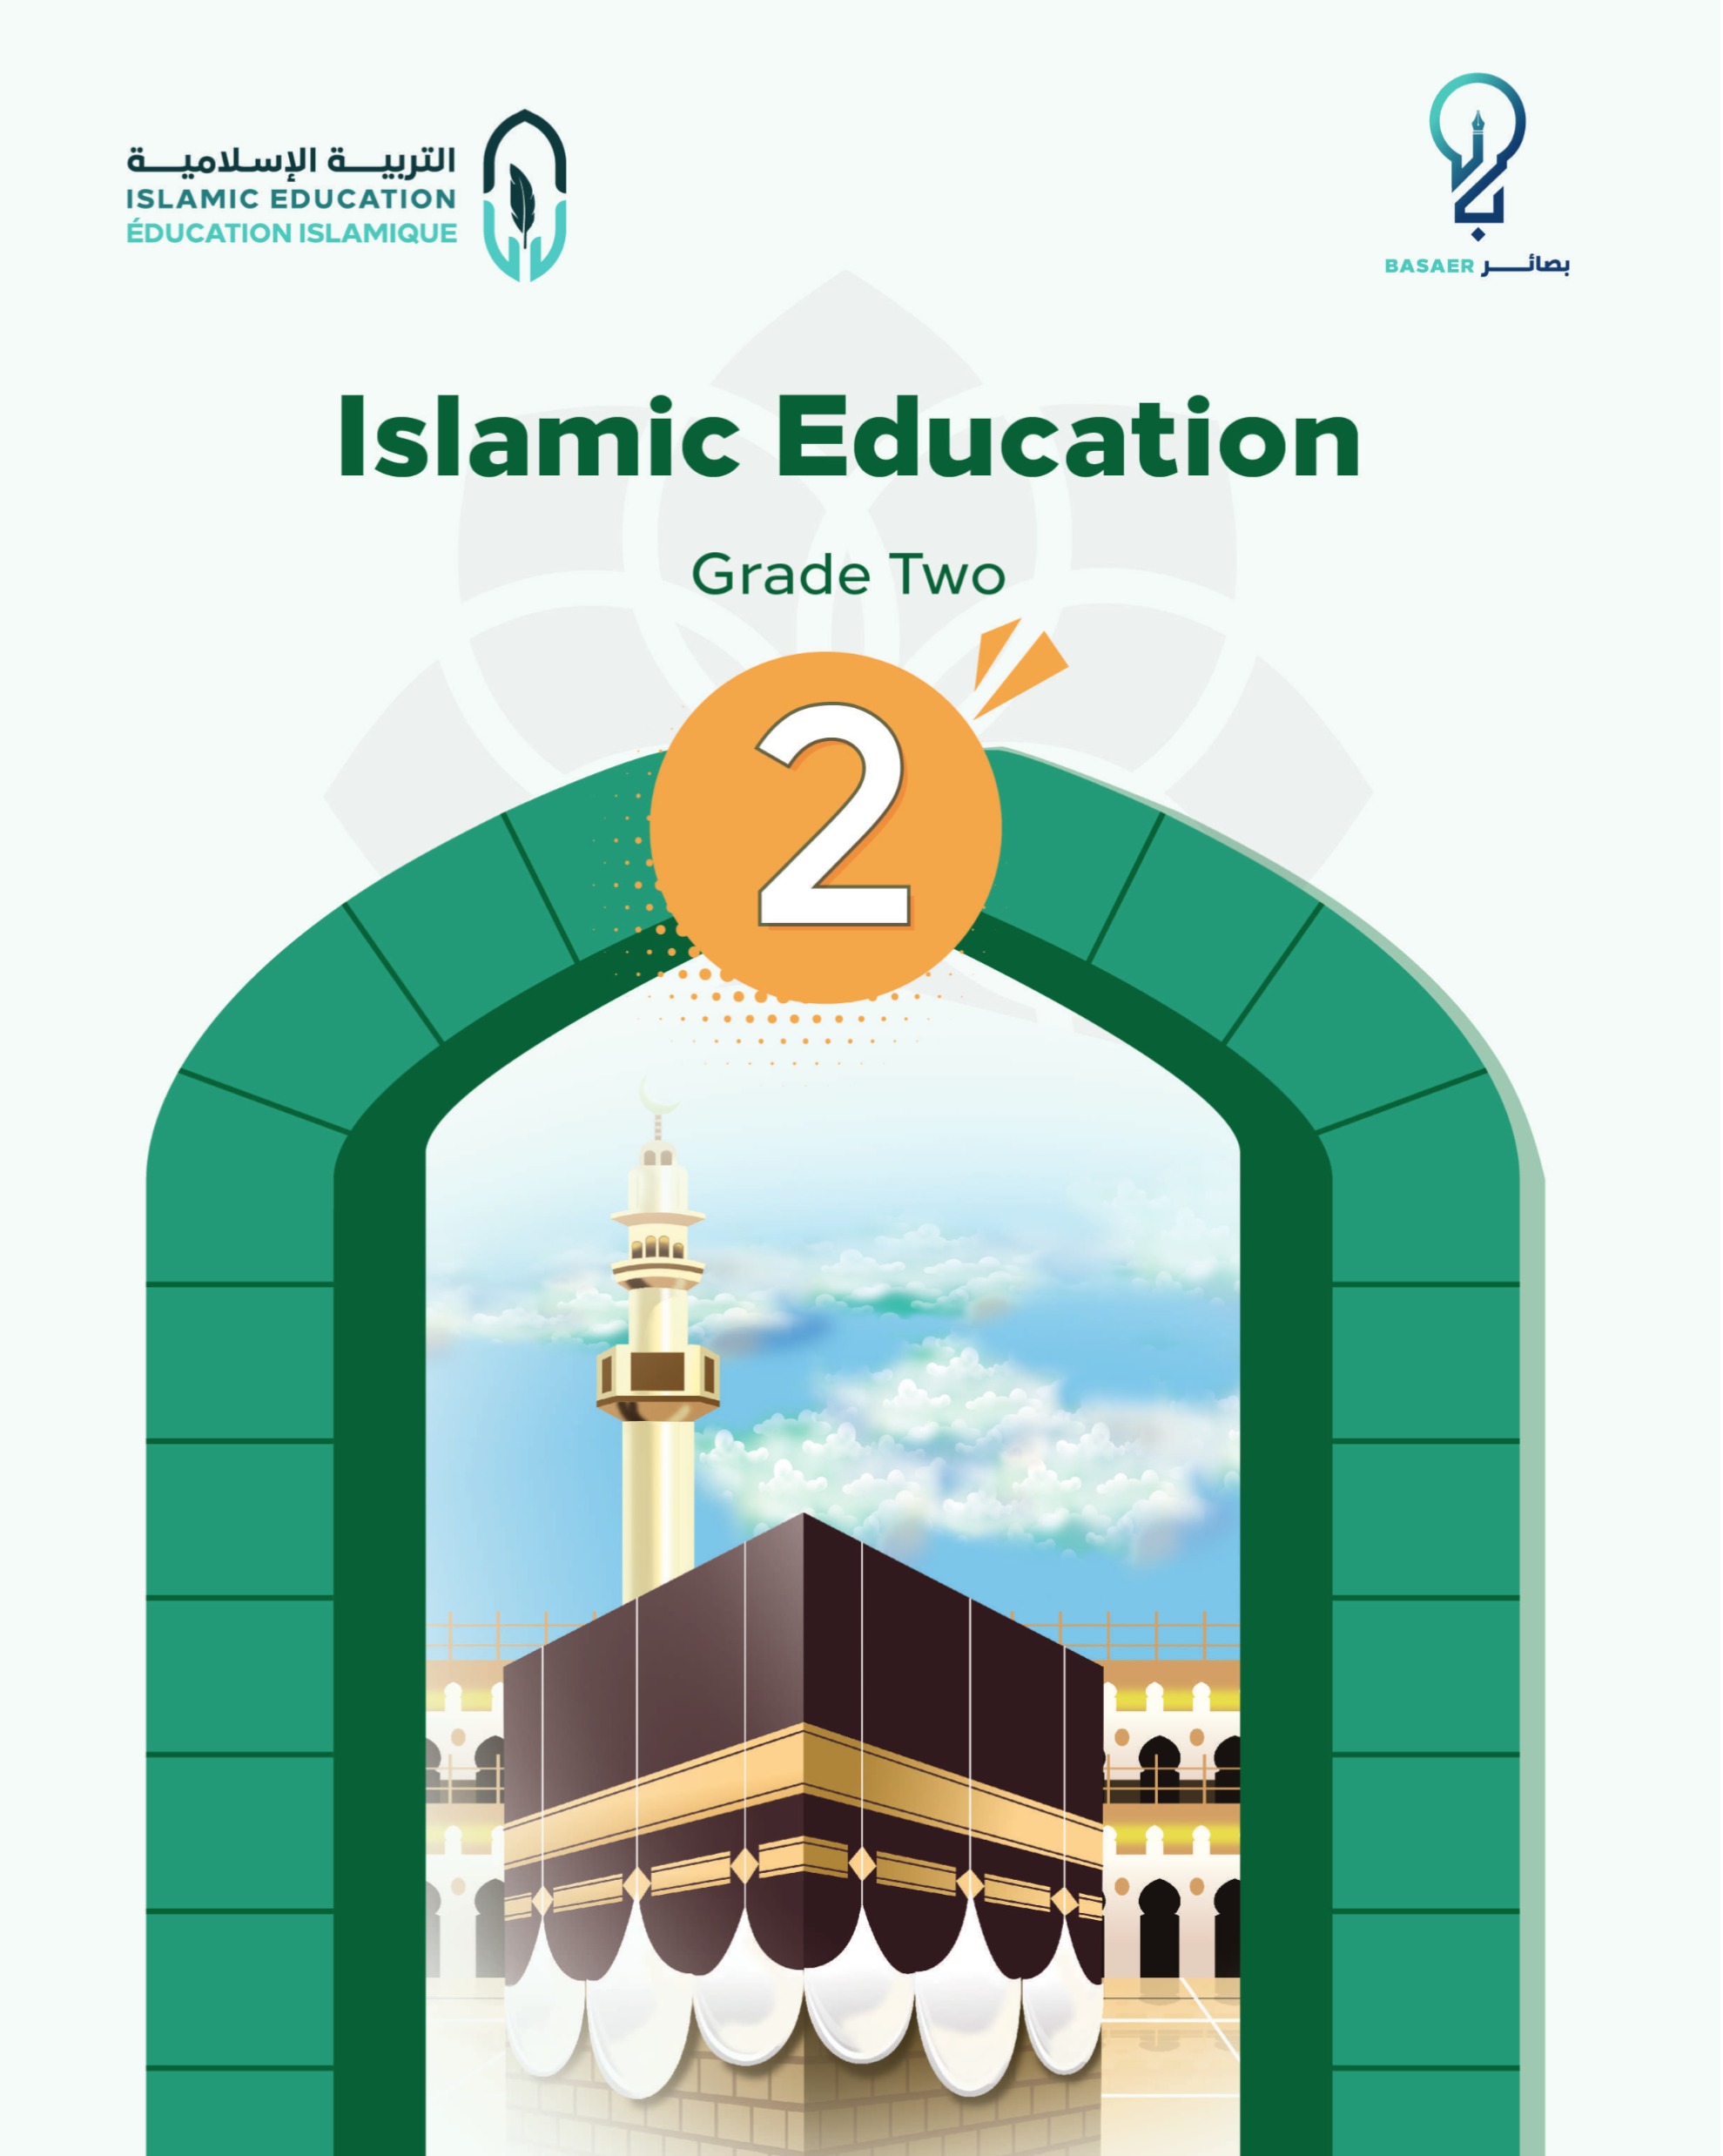 (2) Islamic Education